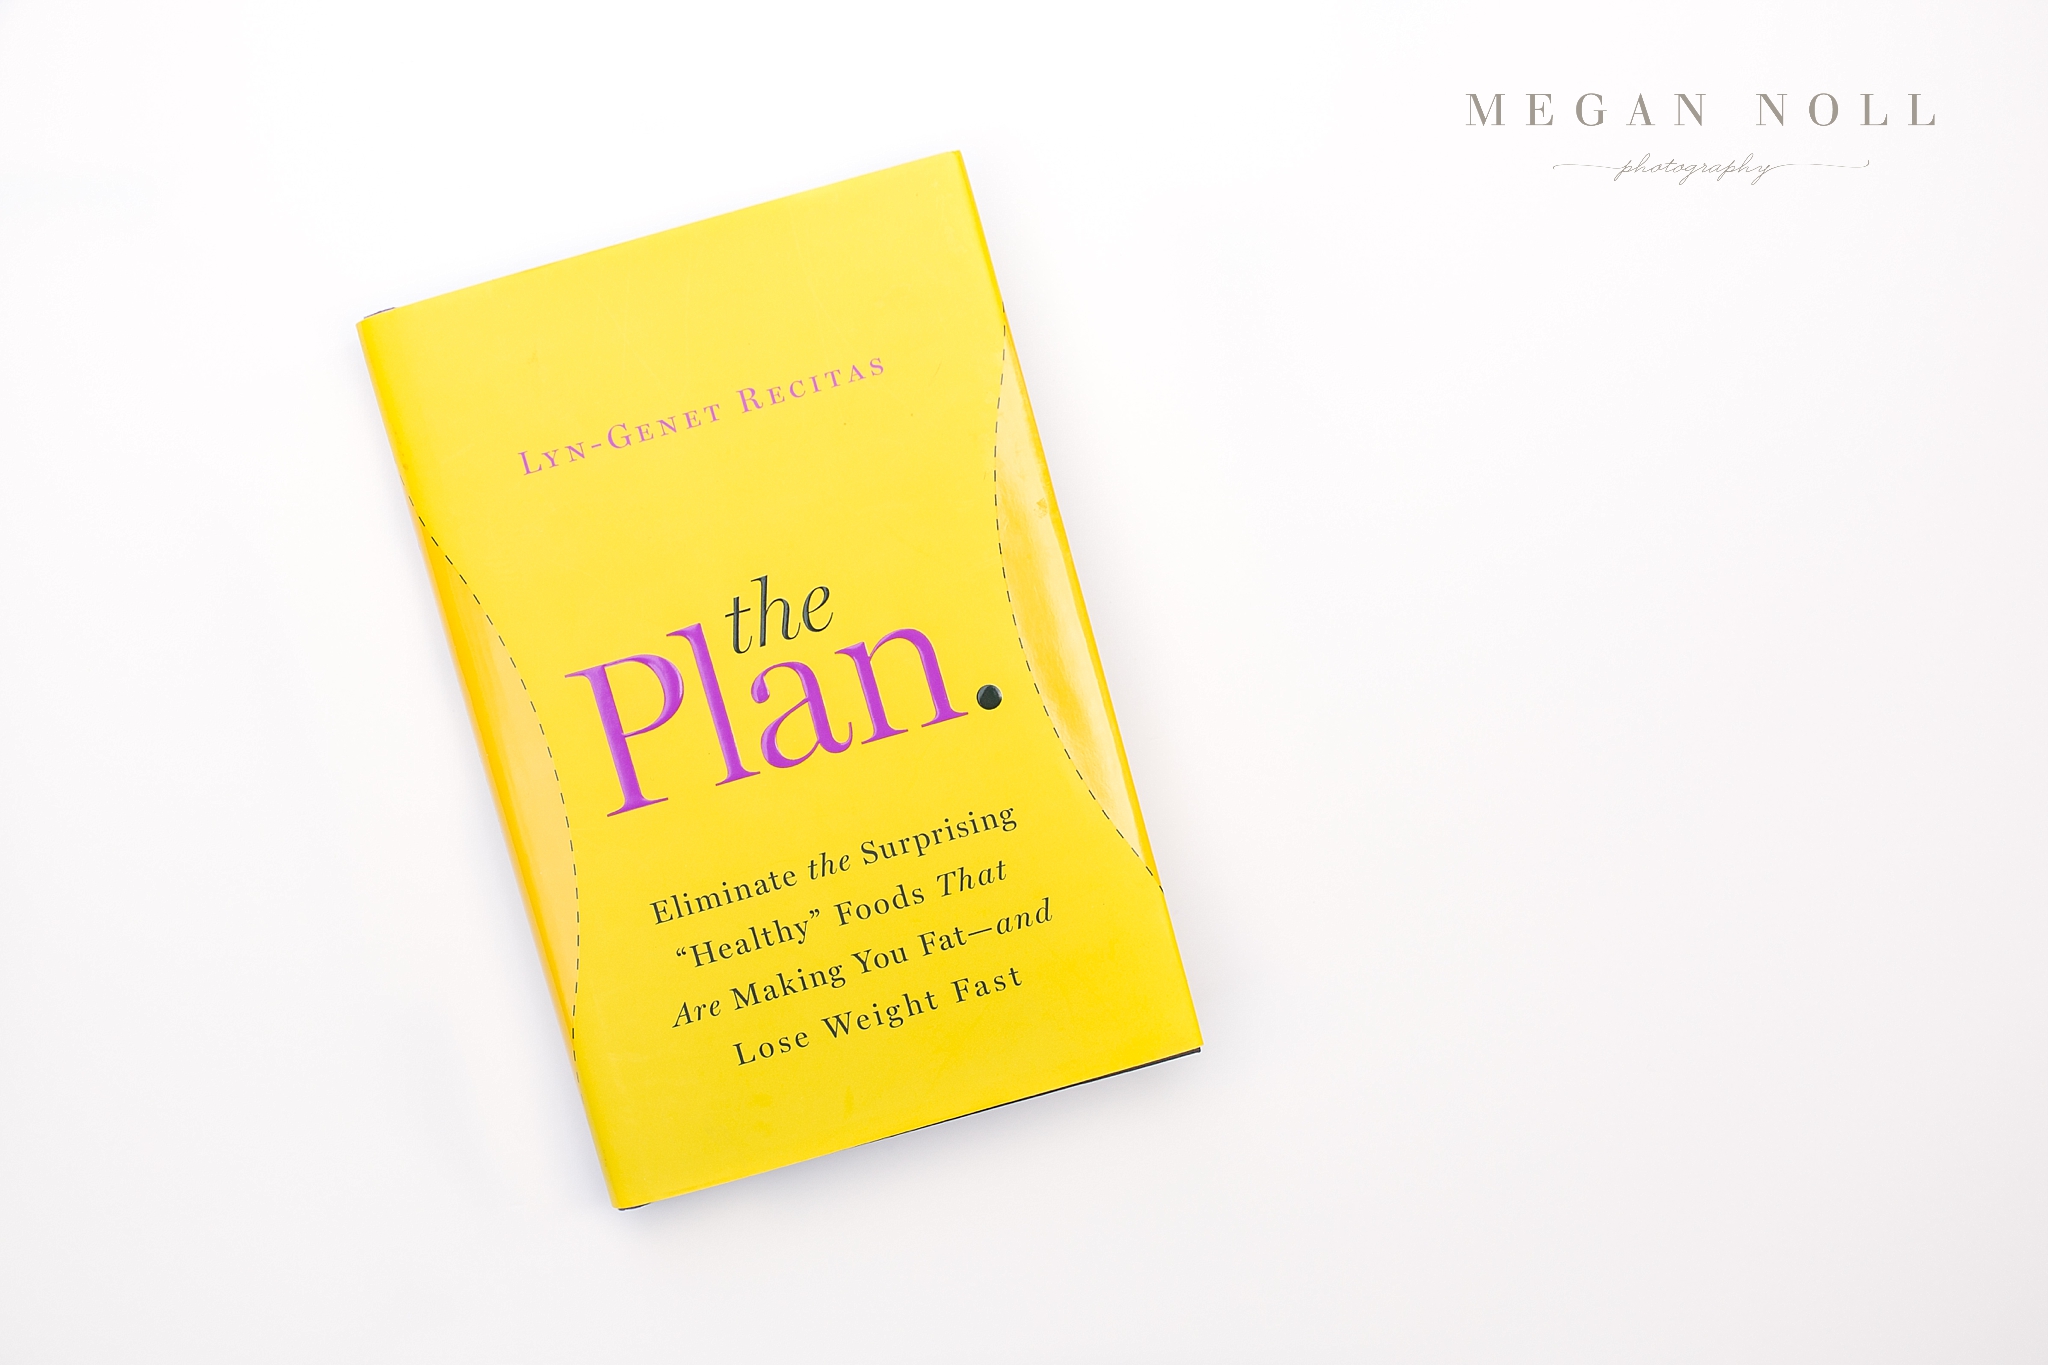 The Plan, Lyn-Genet Recitas, The Plan Review, Diets that work, food is medicine